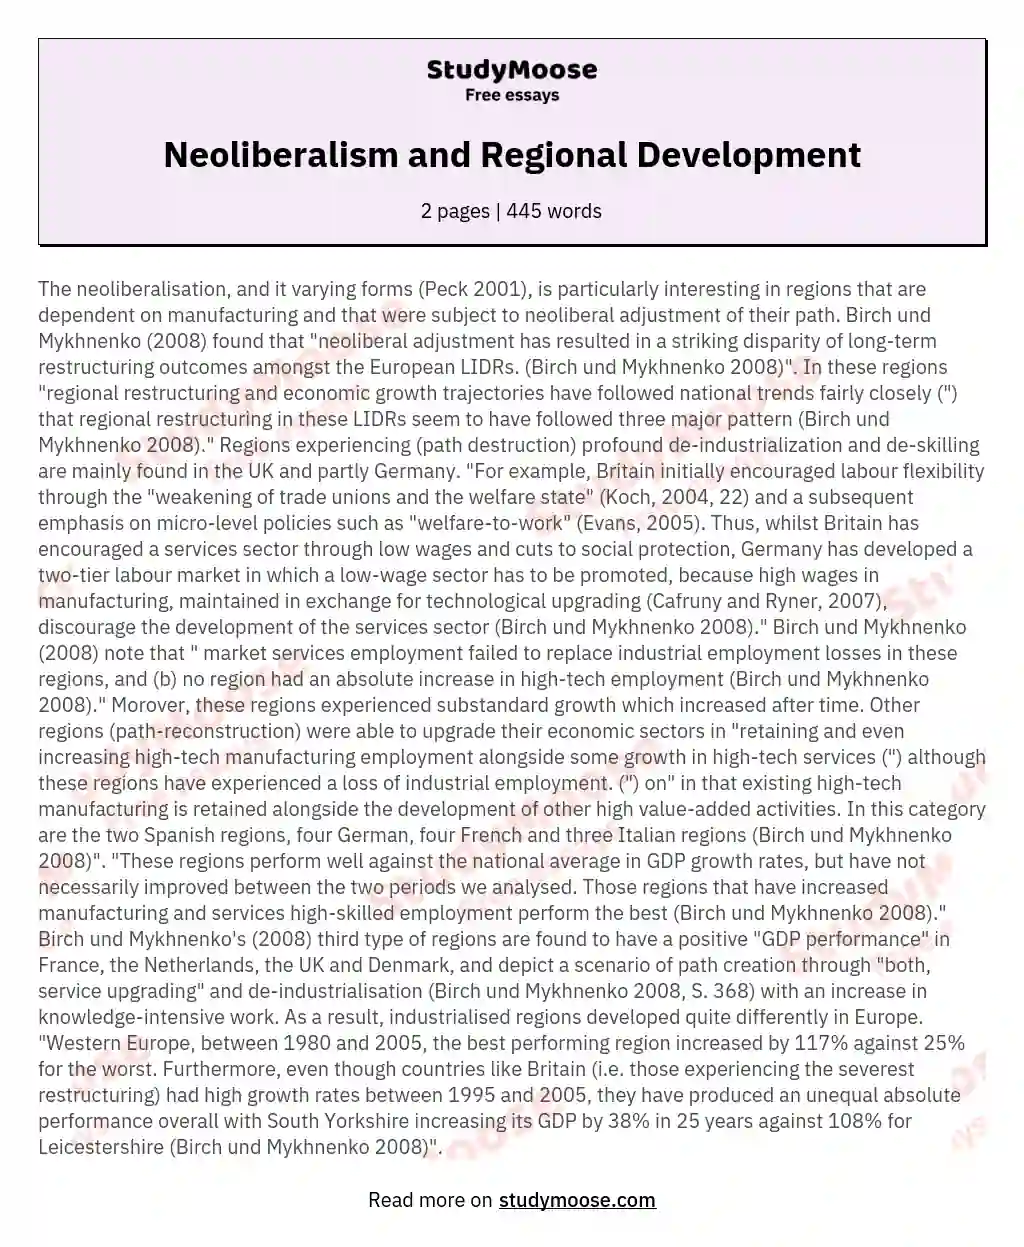 Neoliberalism and Regional Development essay